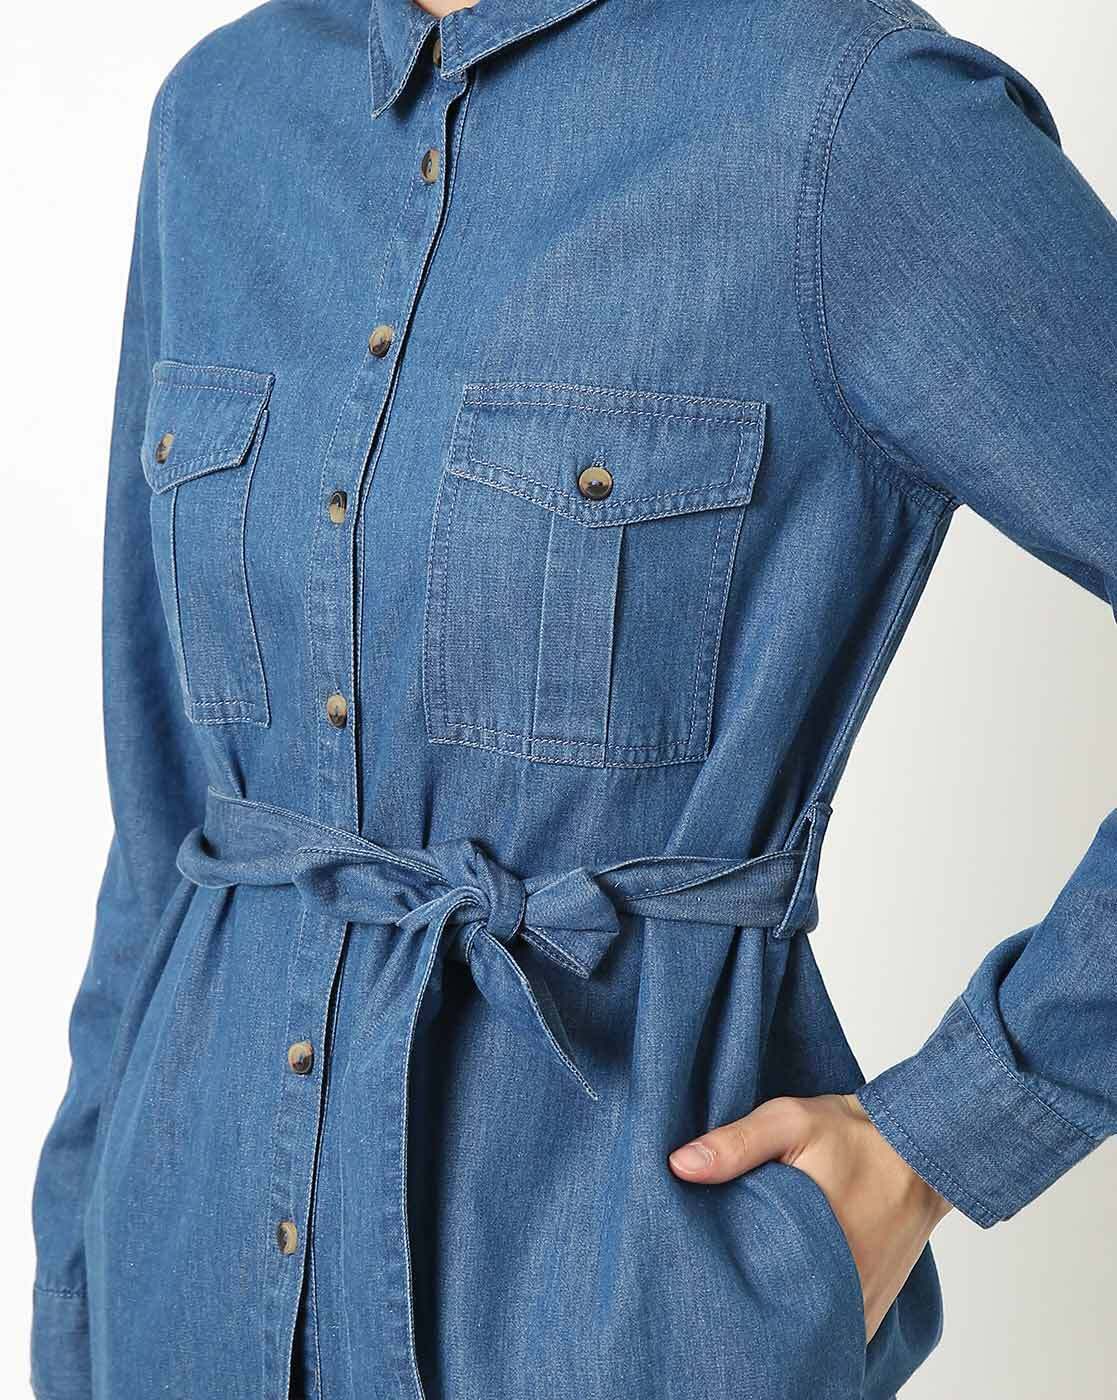 Blue Denim Tops Tunic Dresses Fake Hems Brooches For Women Online – Buy  Blue Denim Tops Tunic Dresses Fake Hems Brooches Online in India